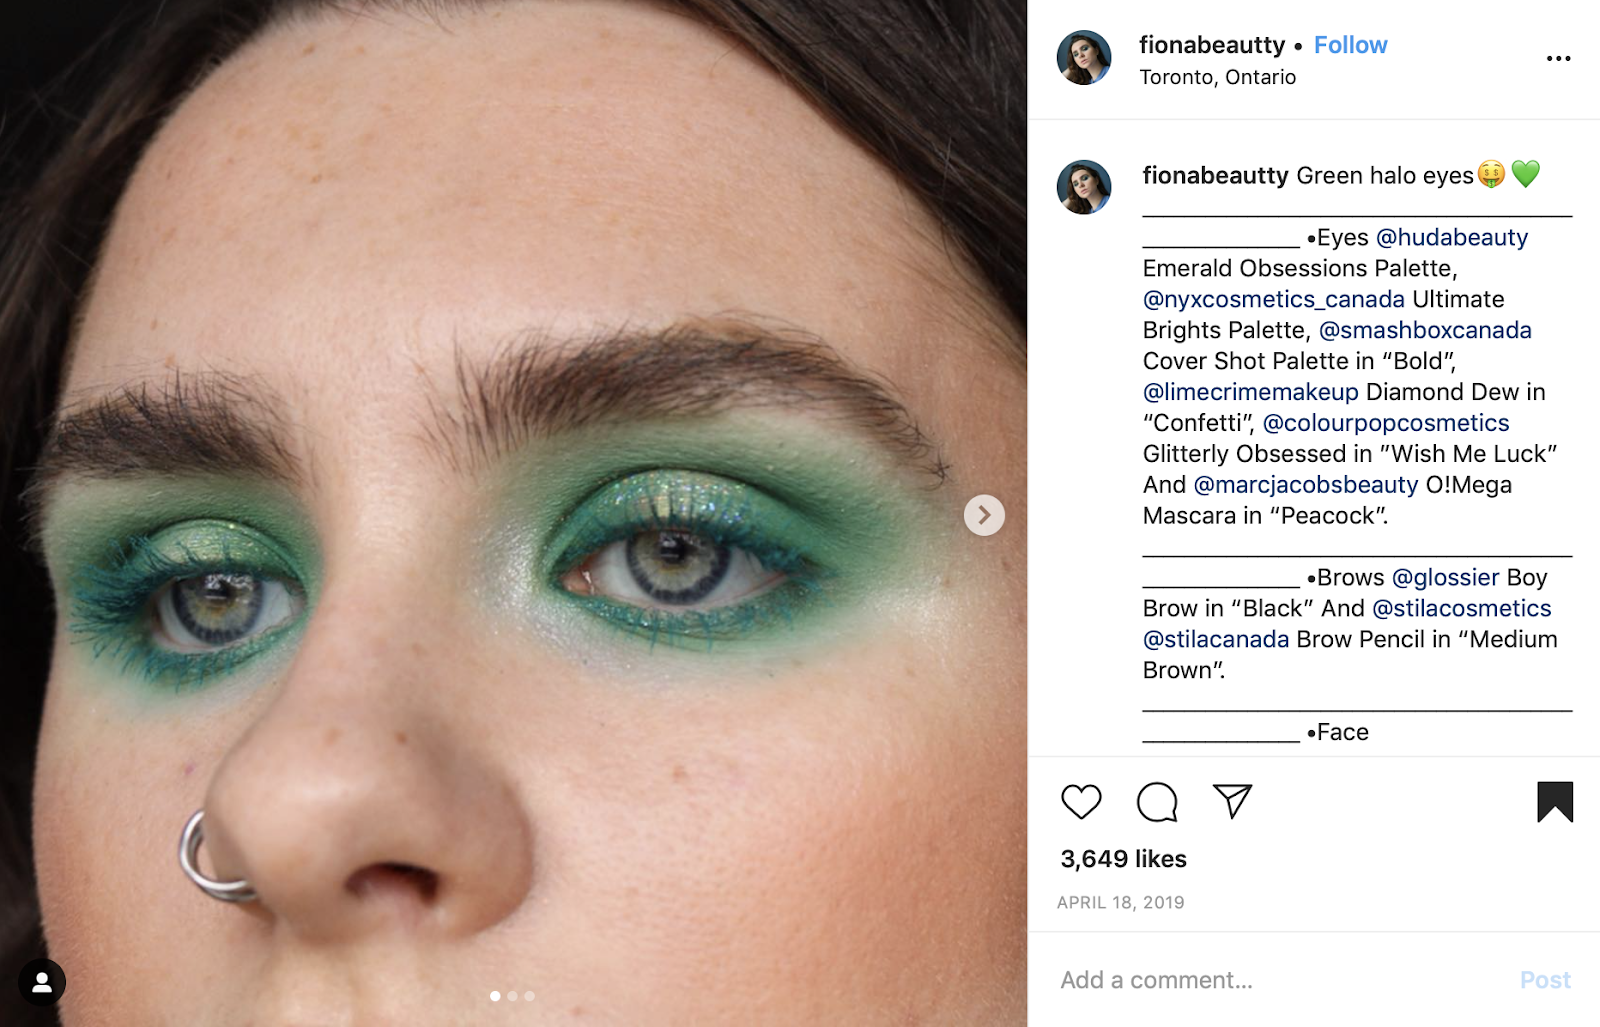 St. Patrick's Day influencer marketing ideas: makeup looks